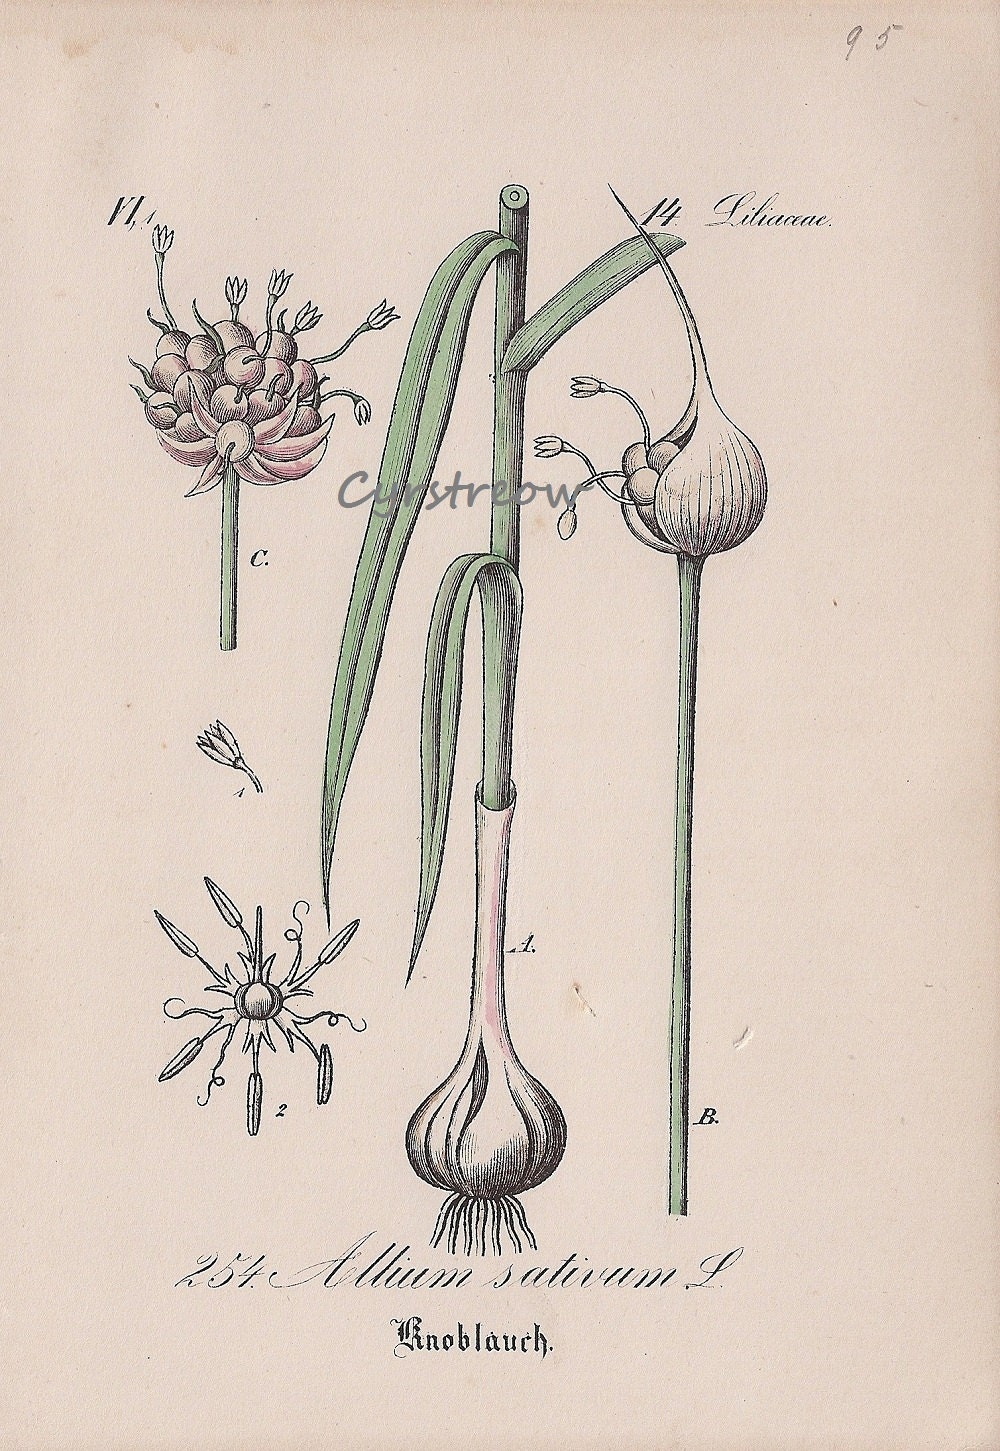 Garlic Art